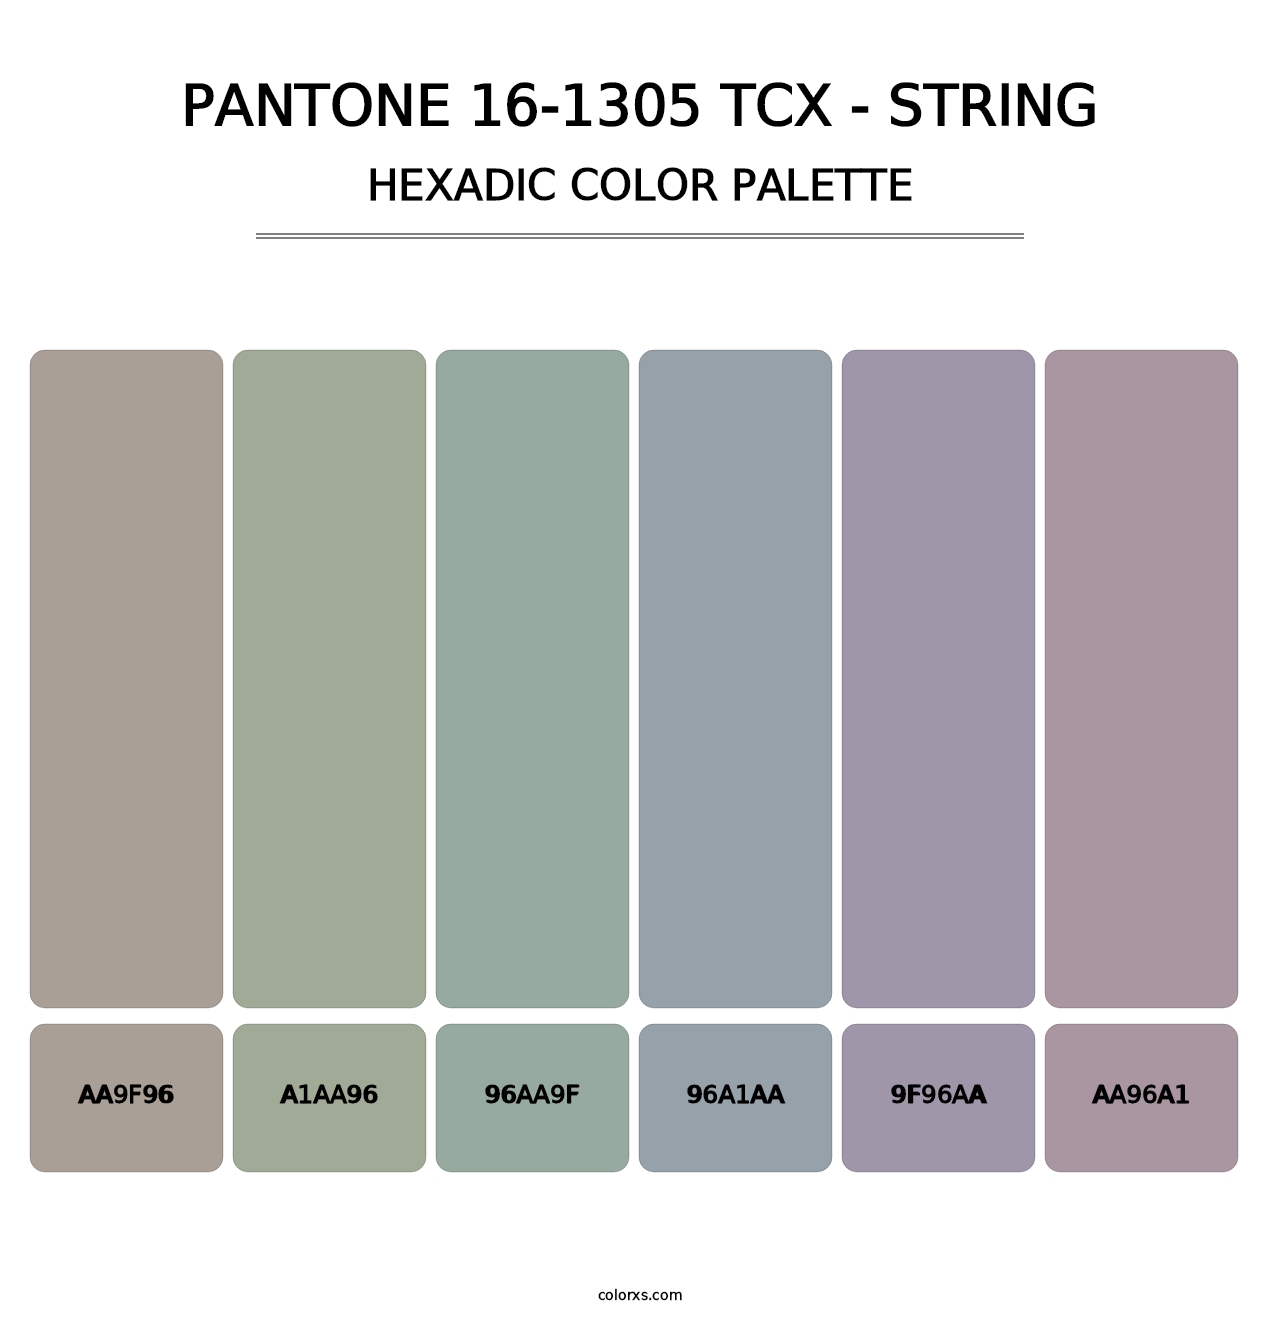 PANTONE 16-1305 TCX - String - Hexadic Color Palette